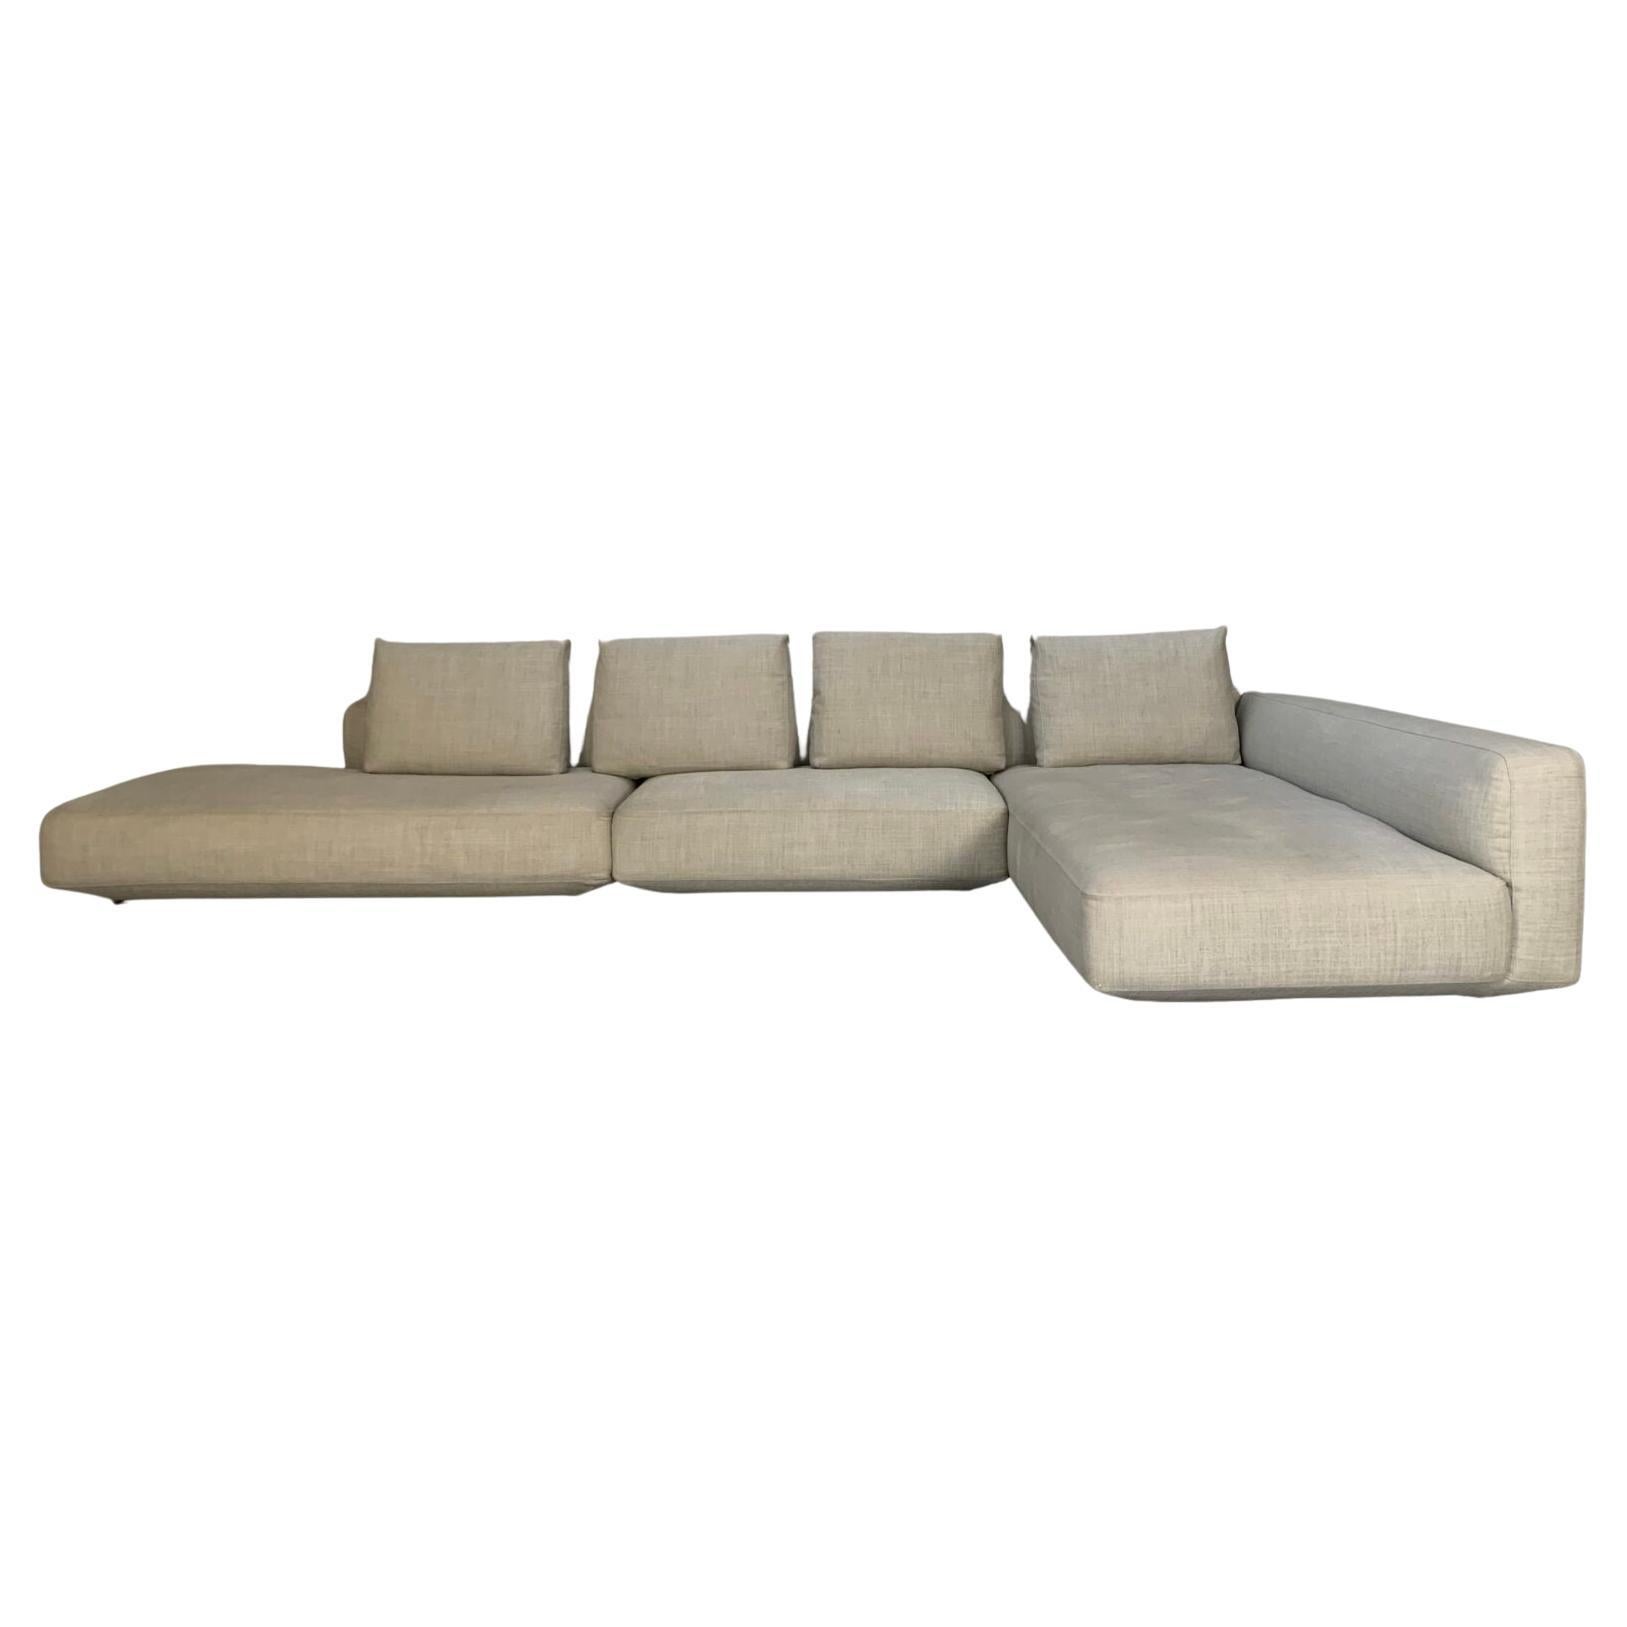 Zanotta “Pianoalto" 6-seat L-shape sofa – in neutral grey linen 